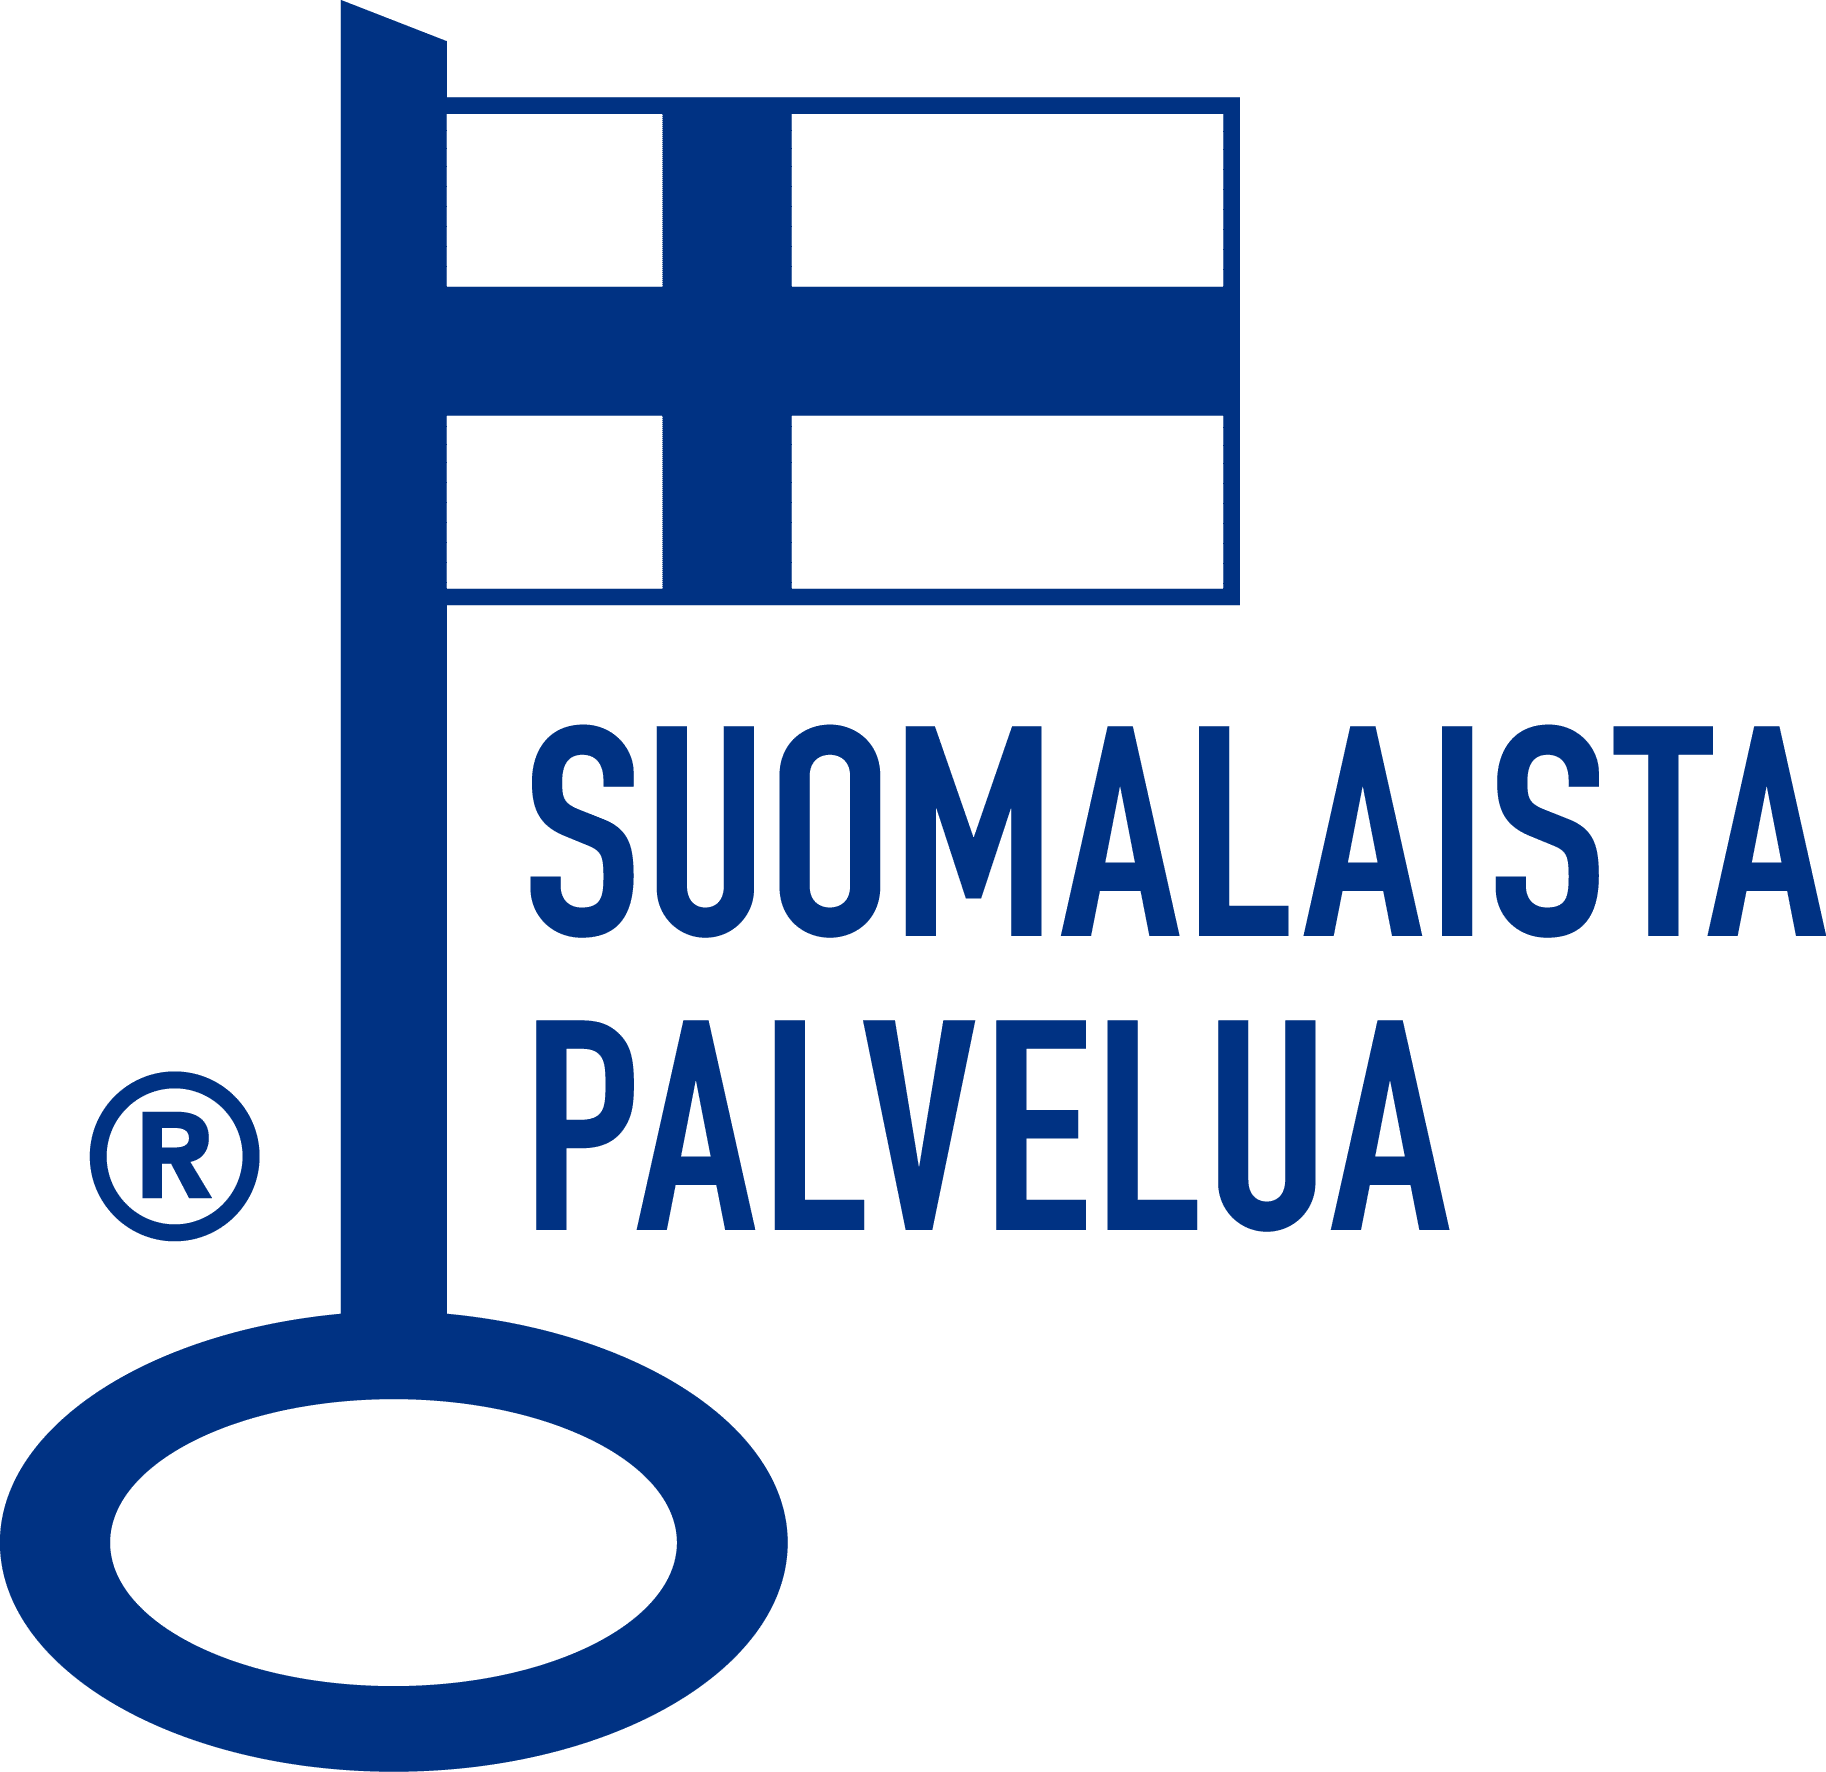 Suomalaista palvelua -logo